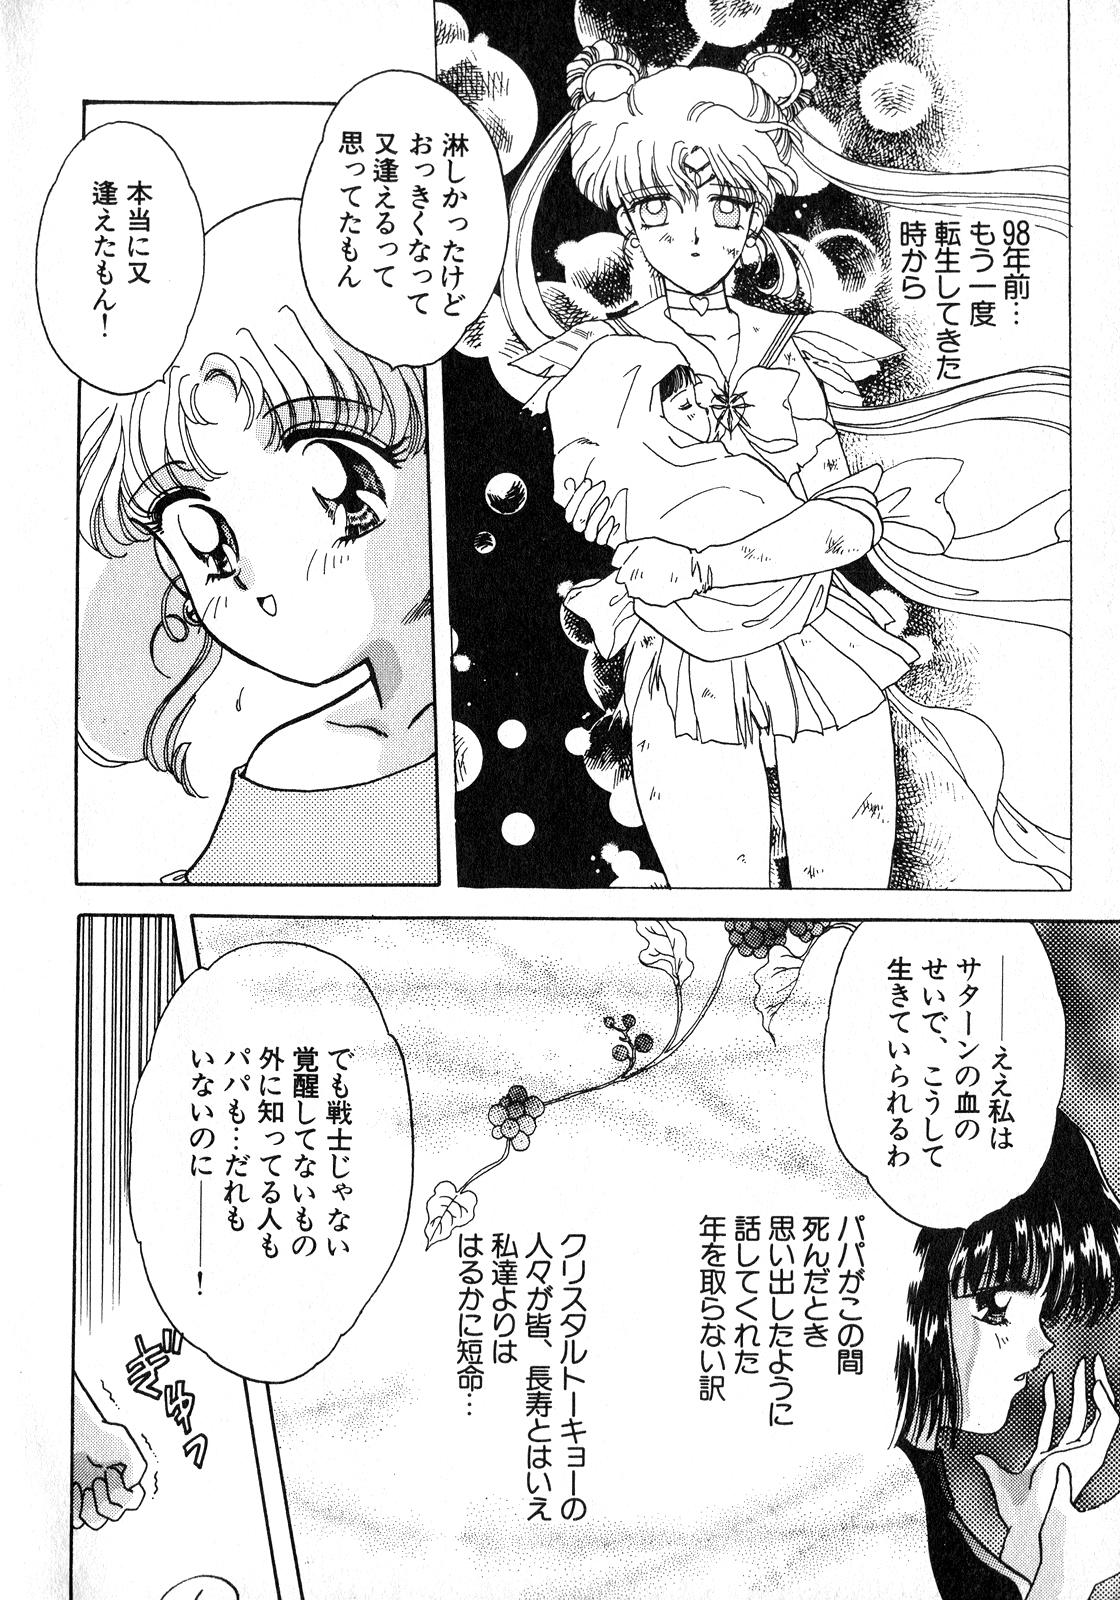 Bisexual Lunatic Party 8 - Sailor moon Coroa - Page 7